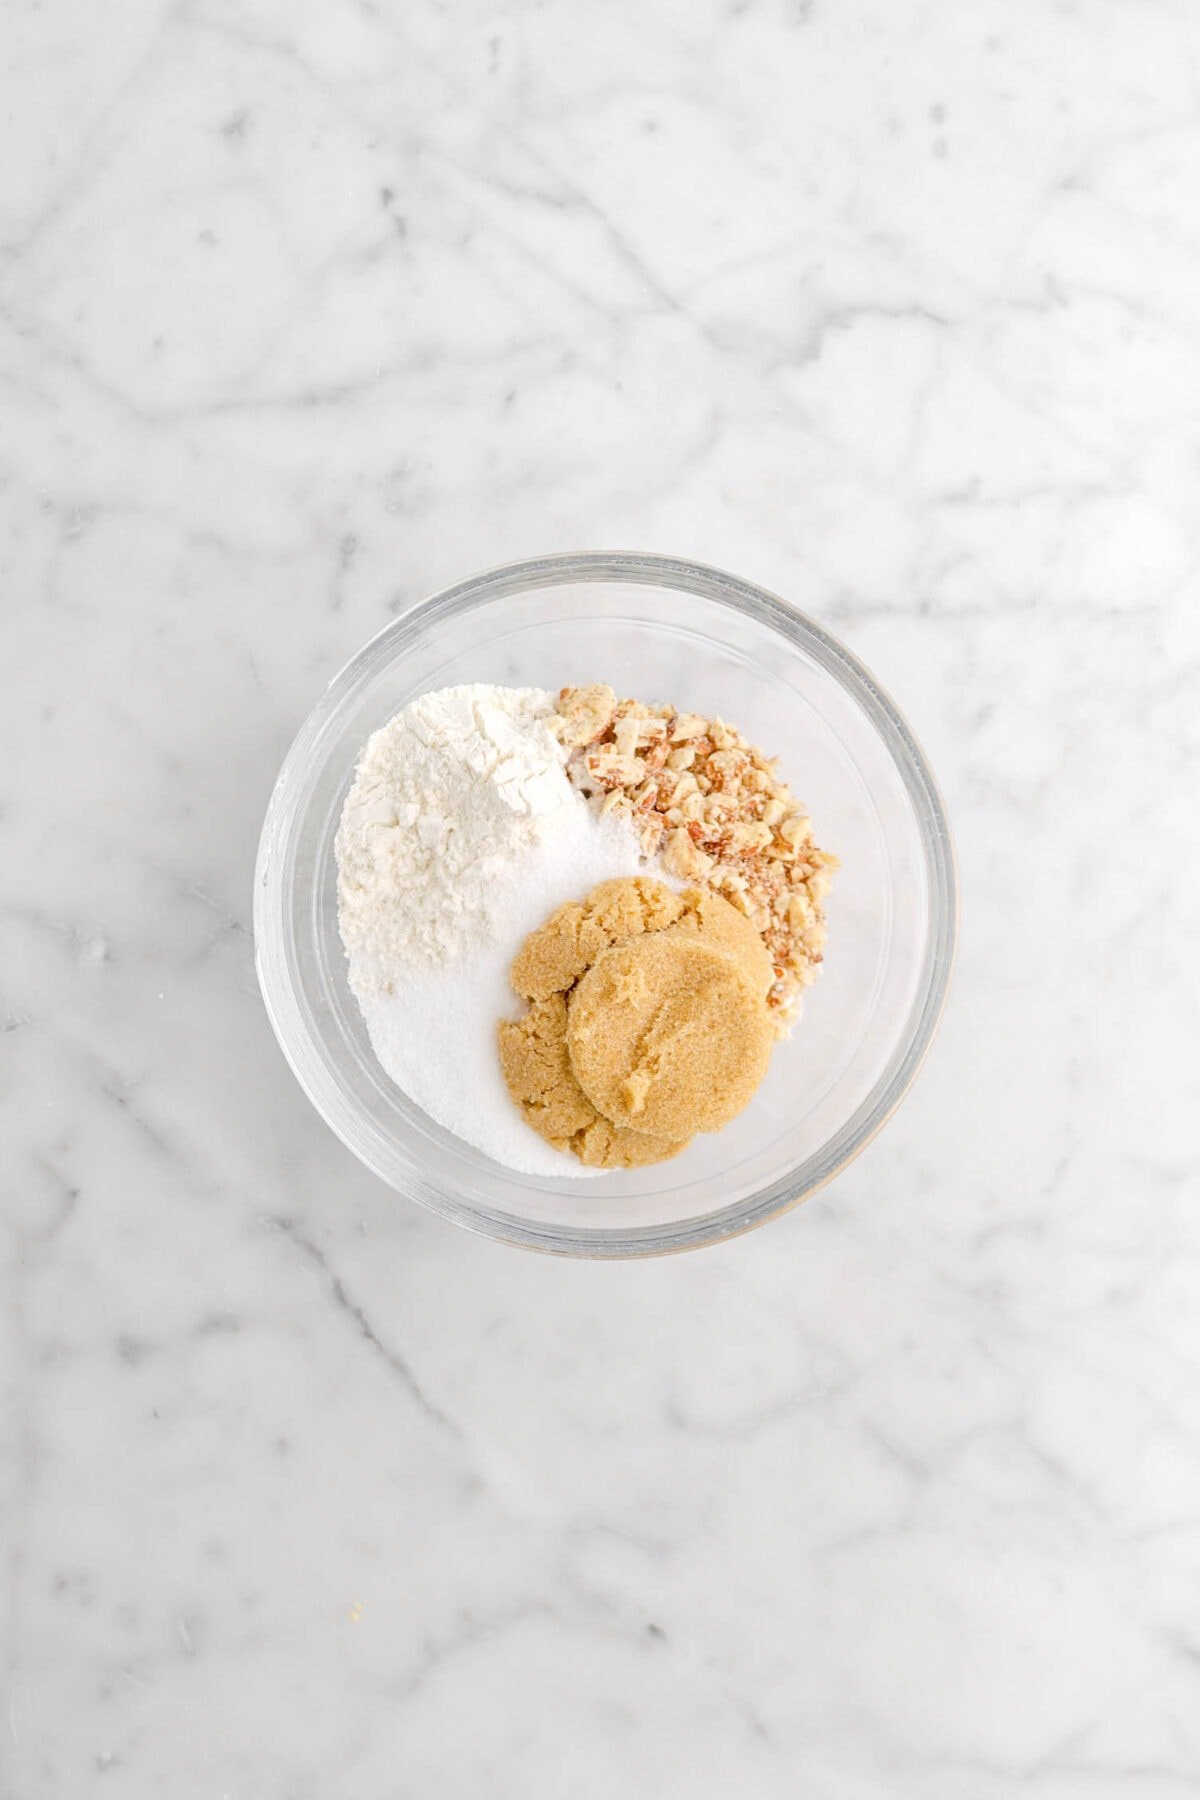 flour, sugar, brown sugar, and chopped almonds in glass bowl